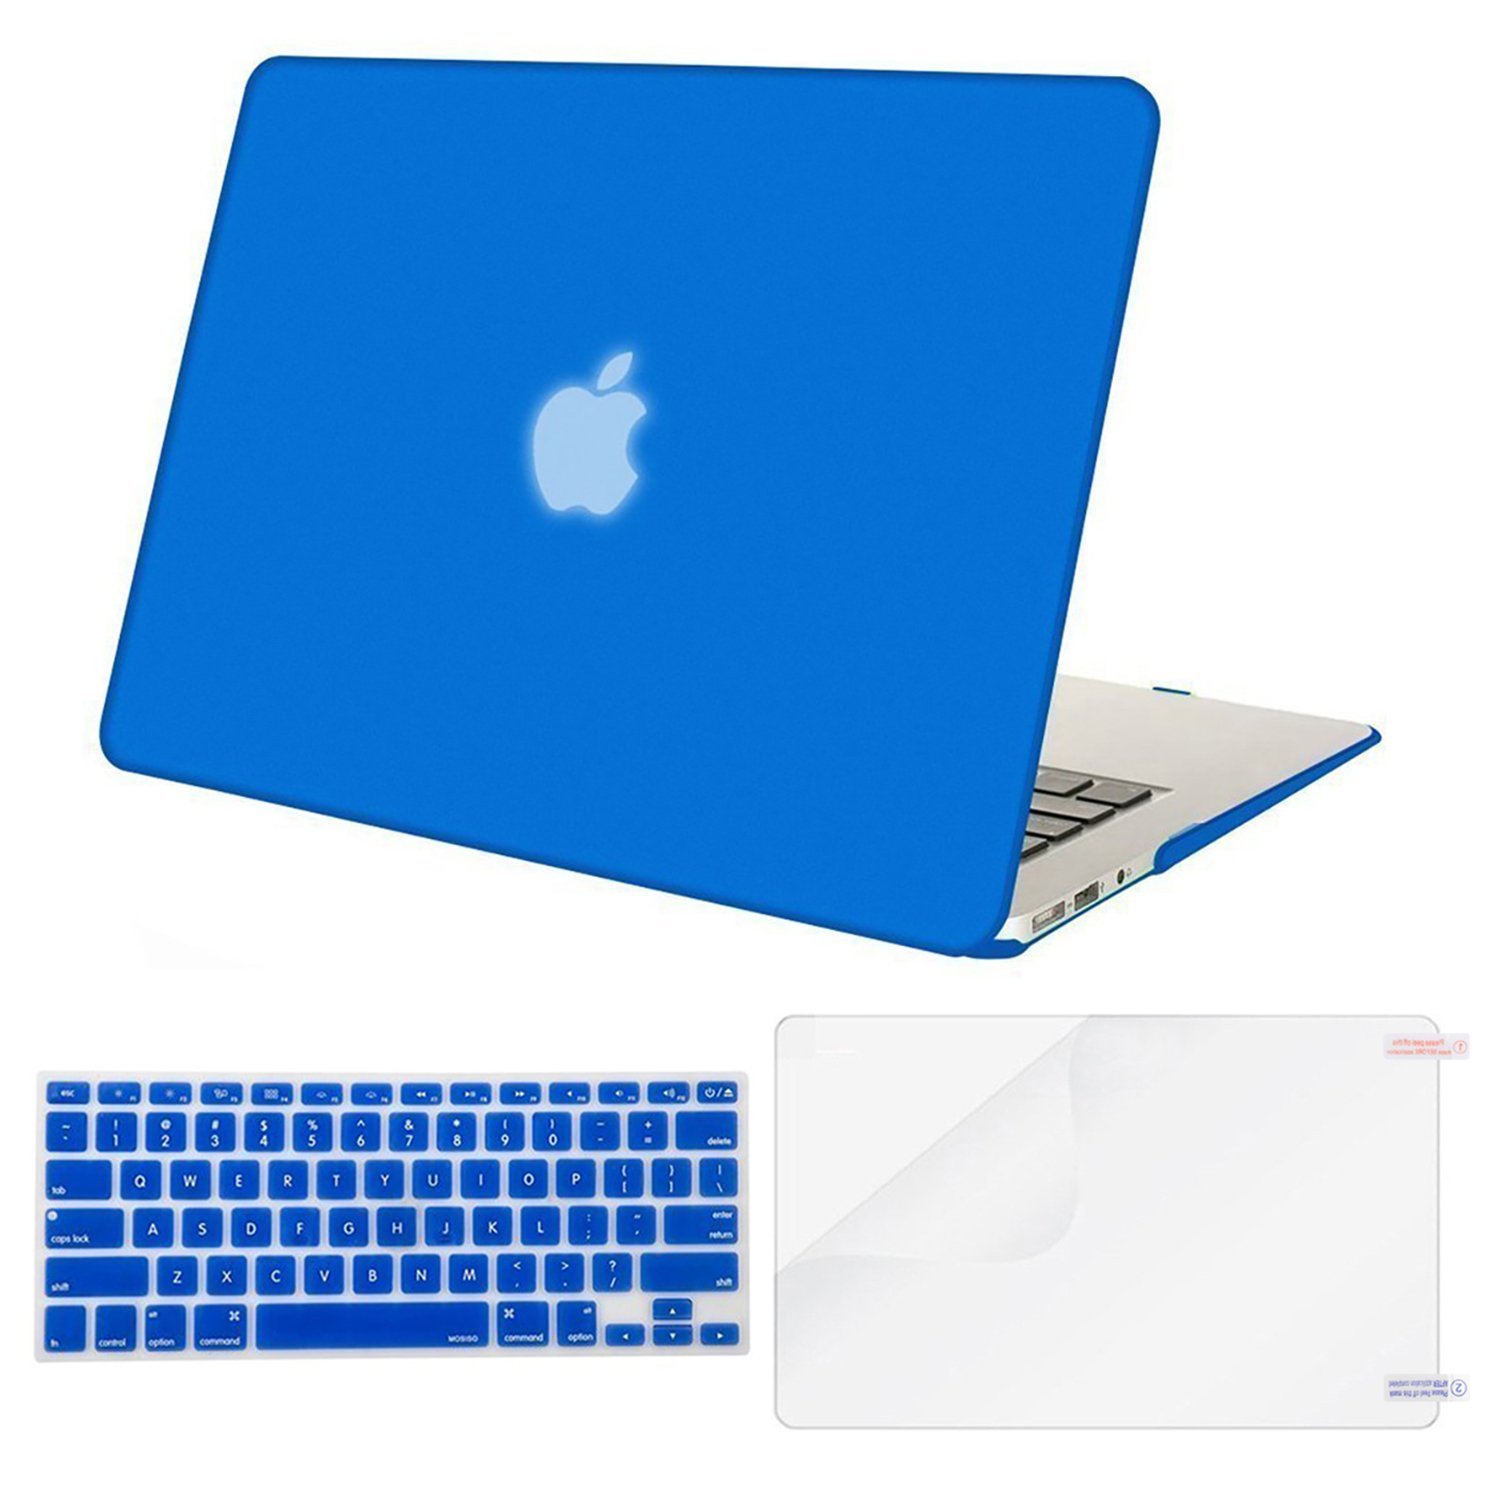 Apple Macbook Air Accessories